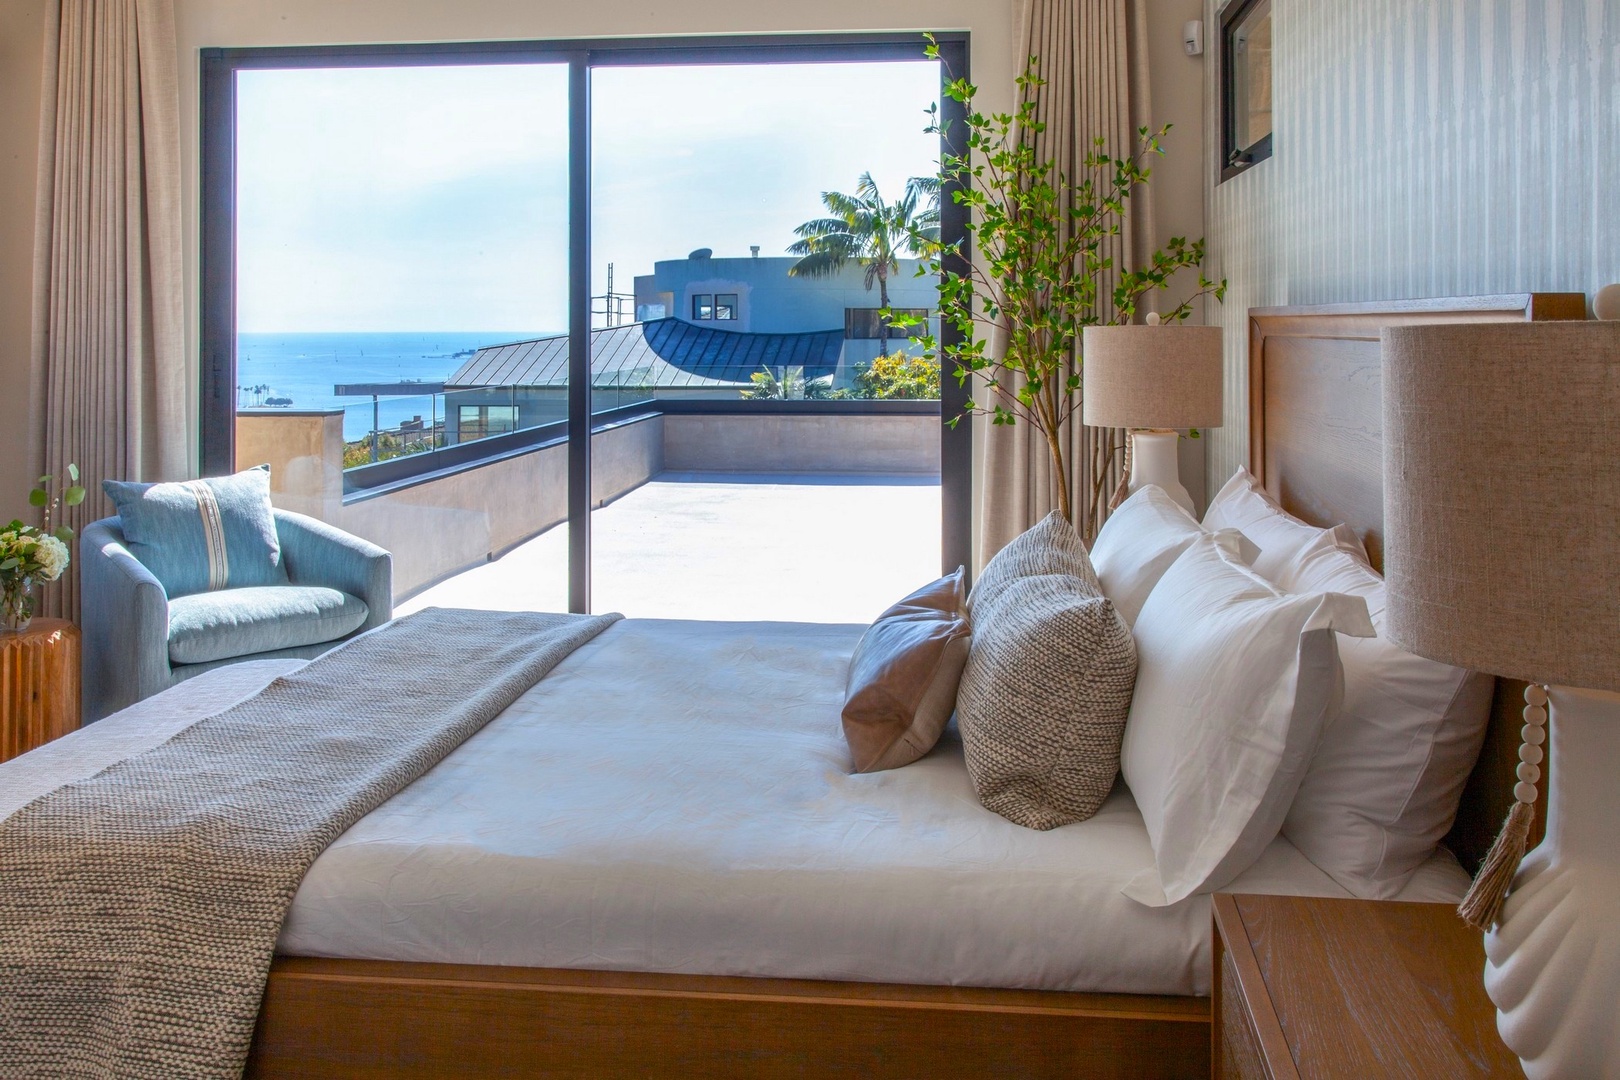 Guest Suite 1 with ocean views